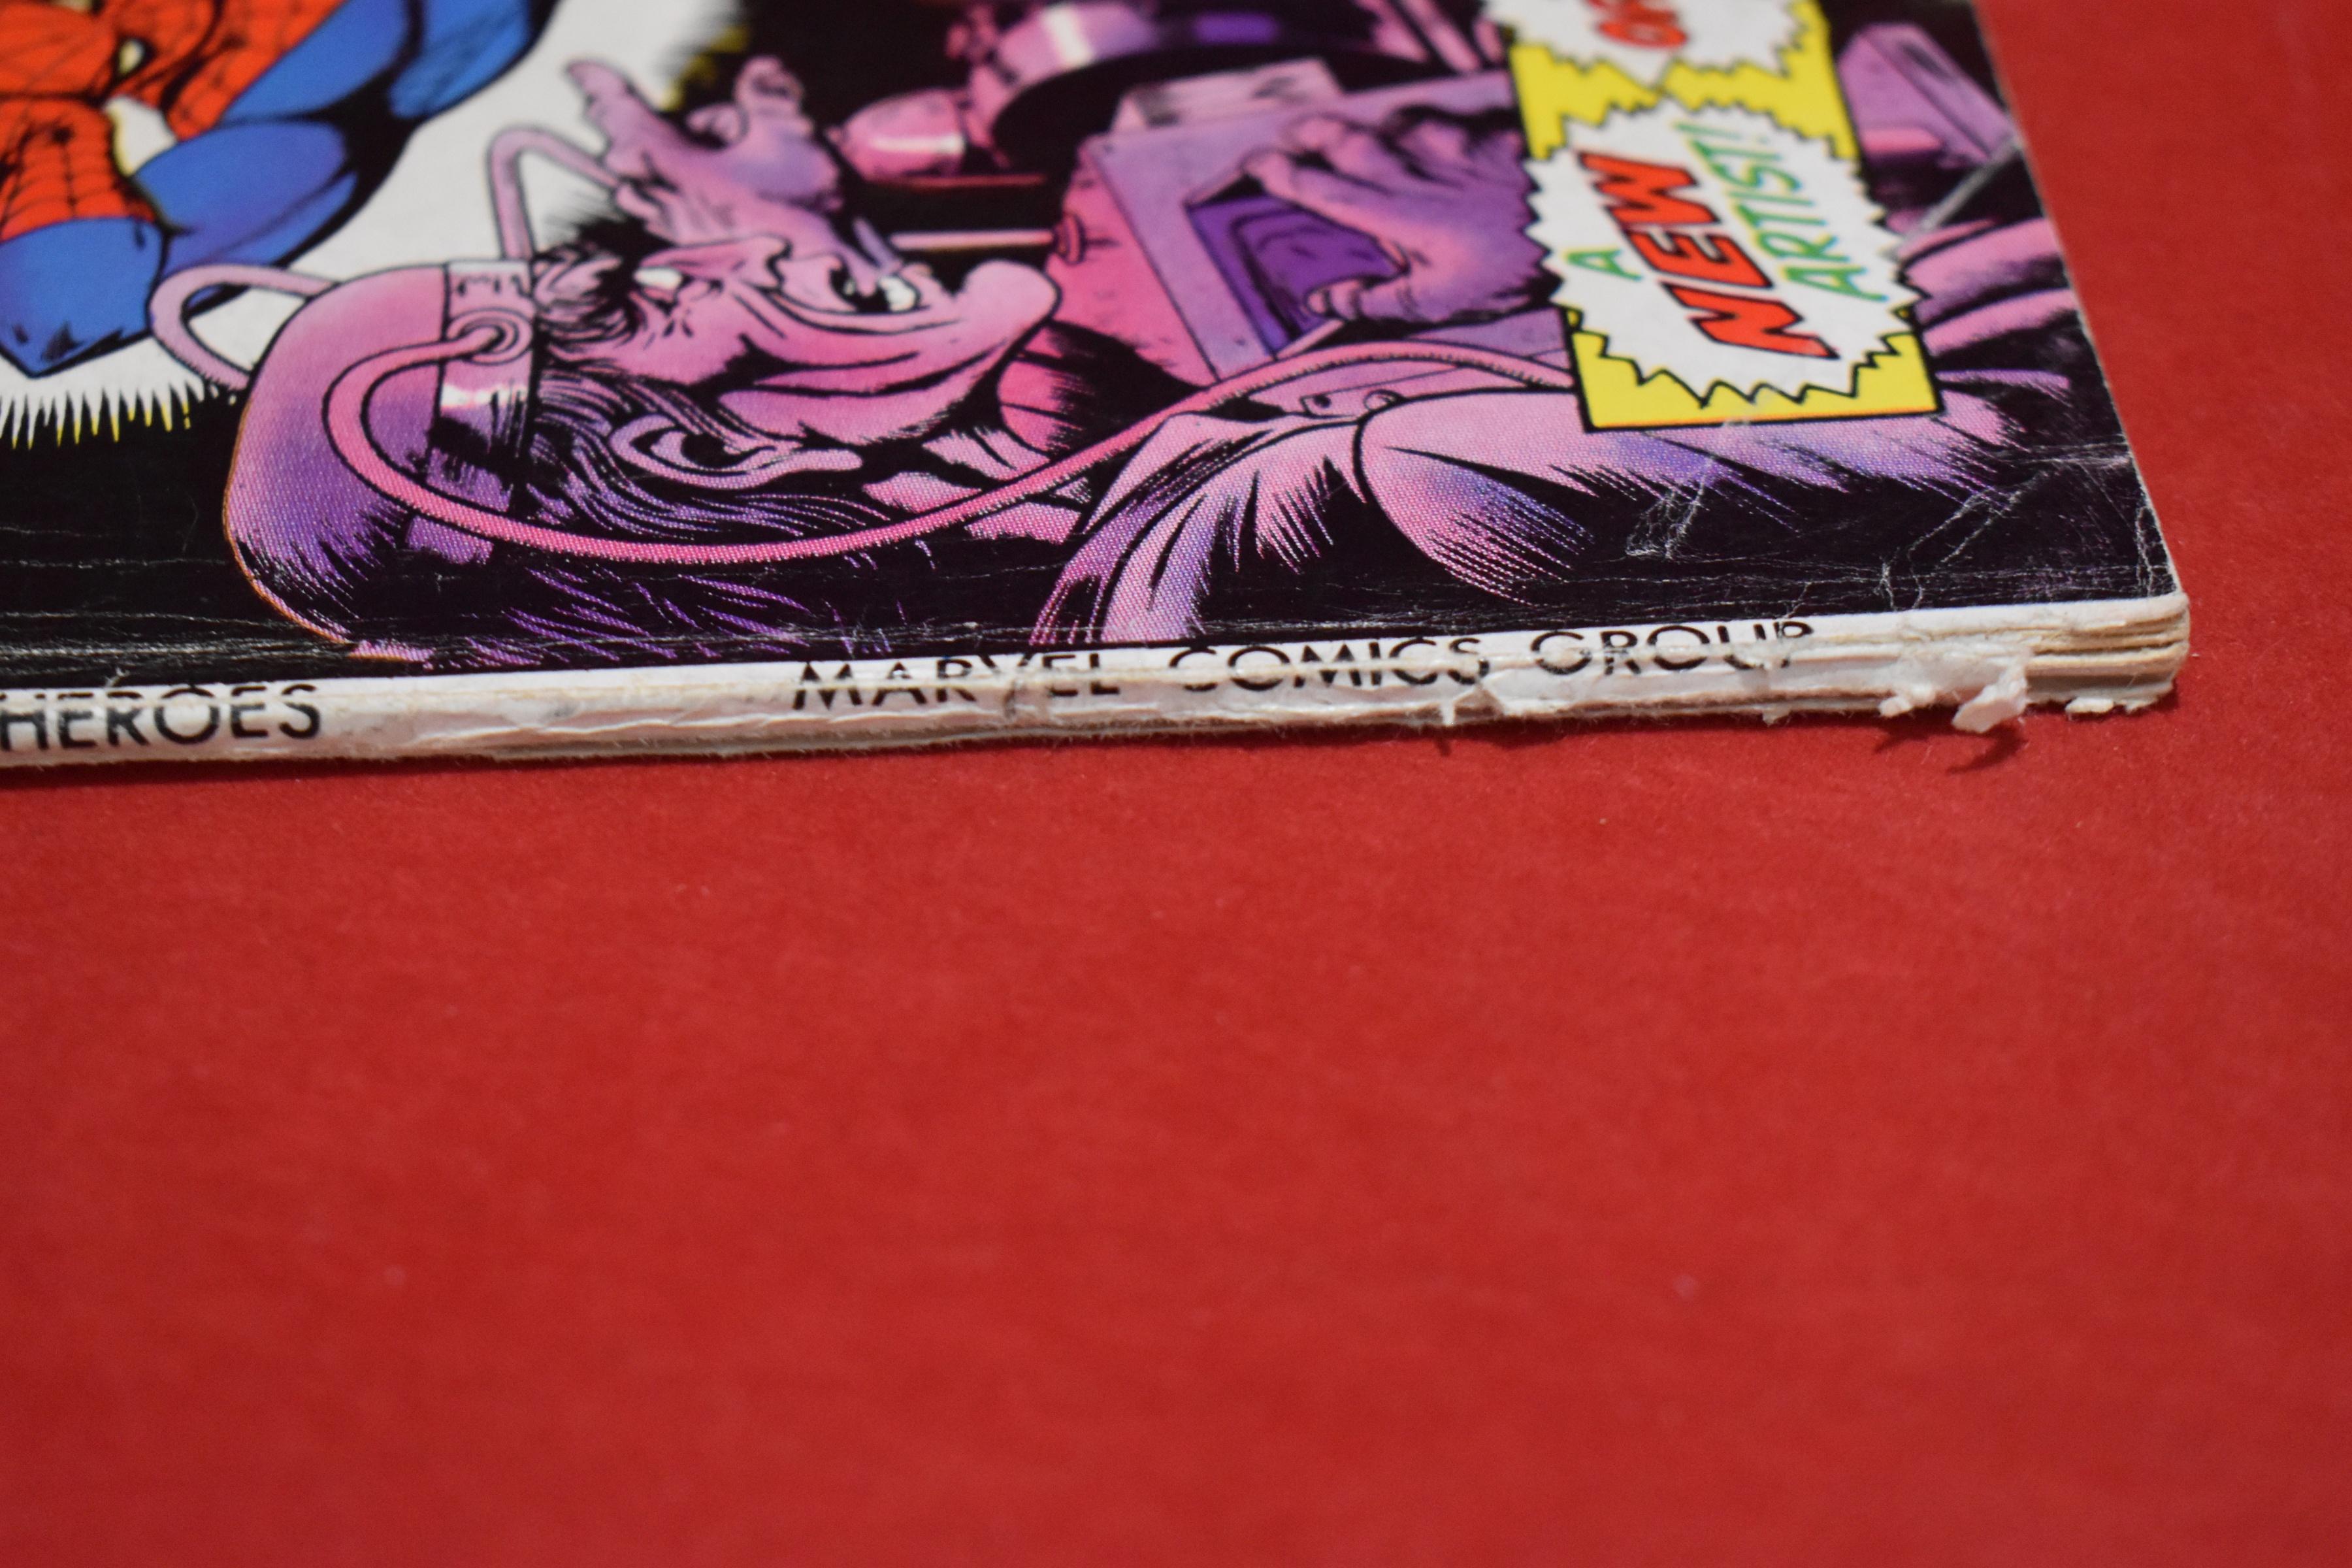 MARVEL SUPER HEROES #14 | KEY STAN LEE SPIDERMAN STORY - ROSS ANDRU COVER ART